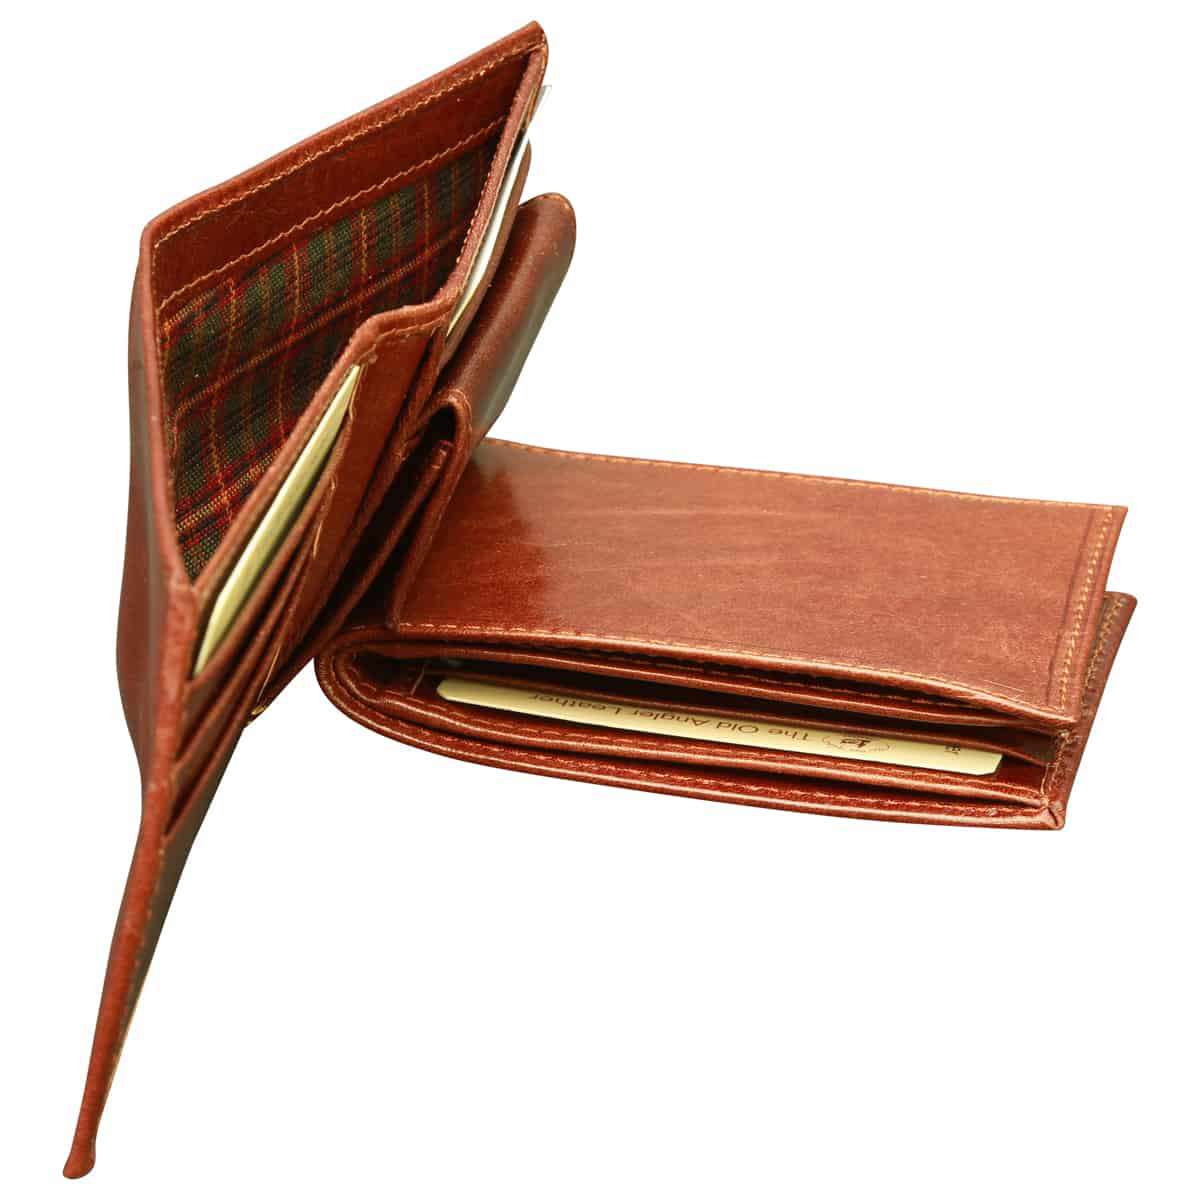 Leather wallet for men - Brown | 802505MA UK | Old Angler Firenze